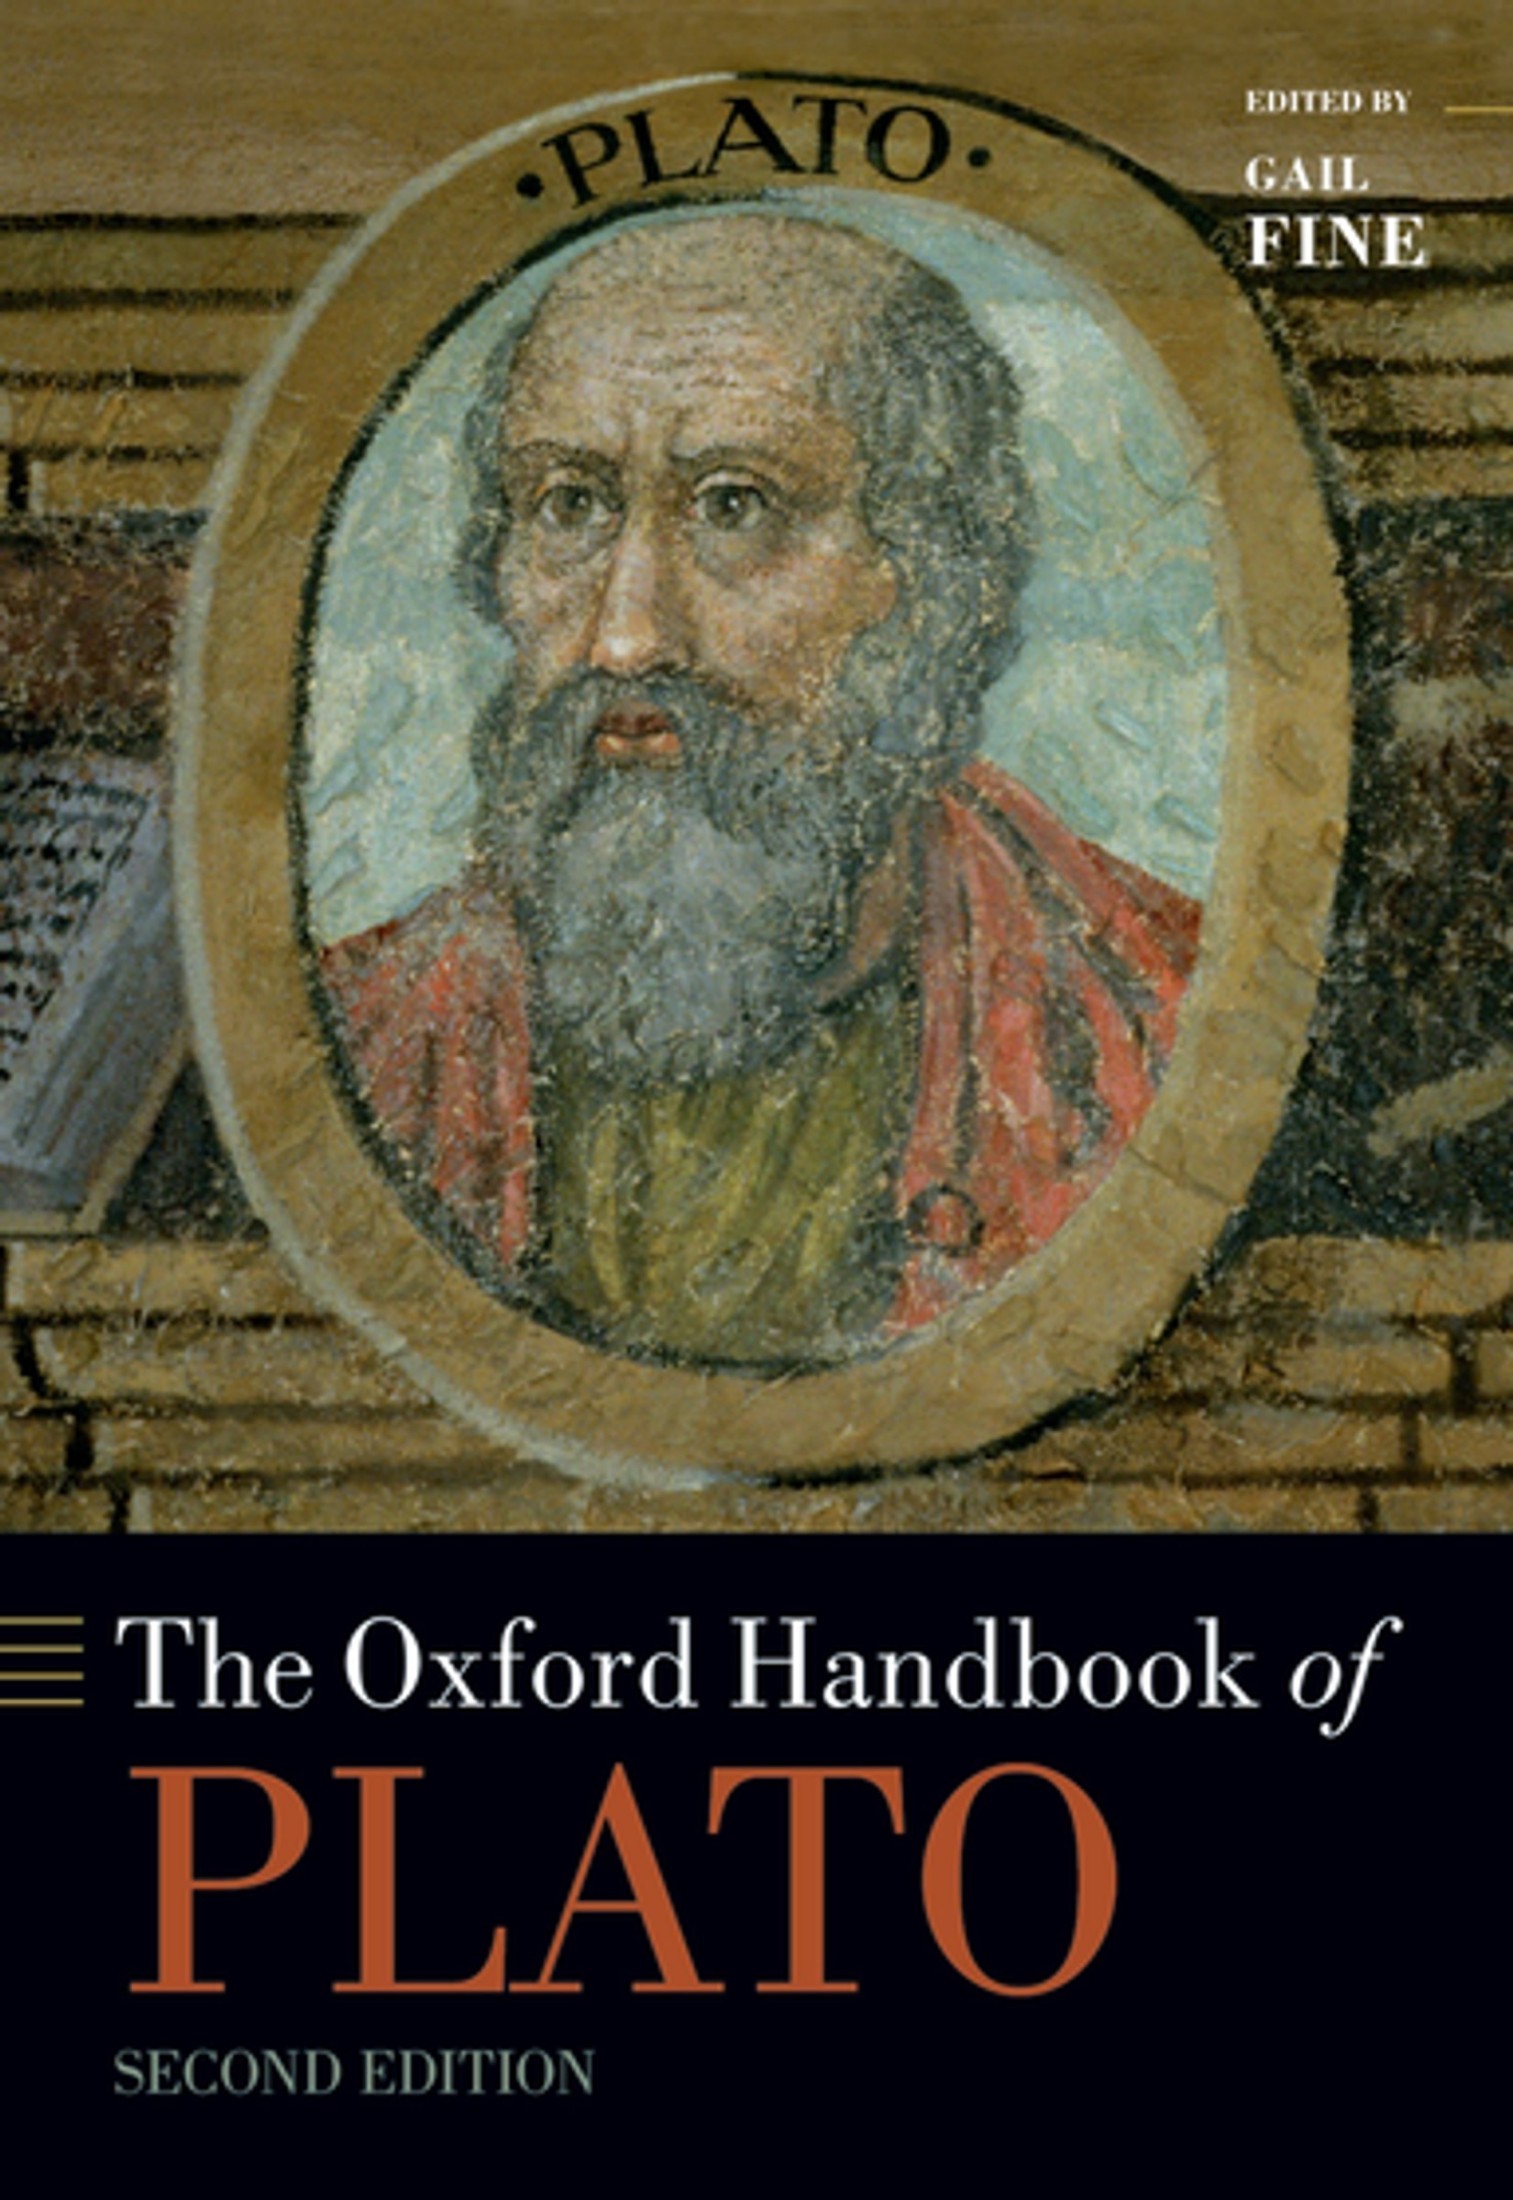 The Oxford Handbook of Plato